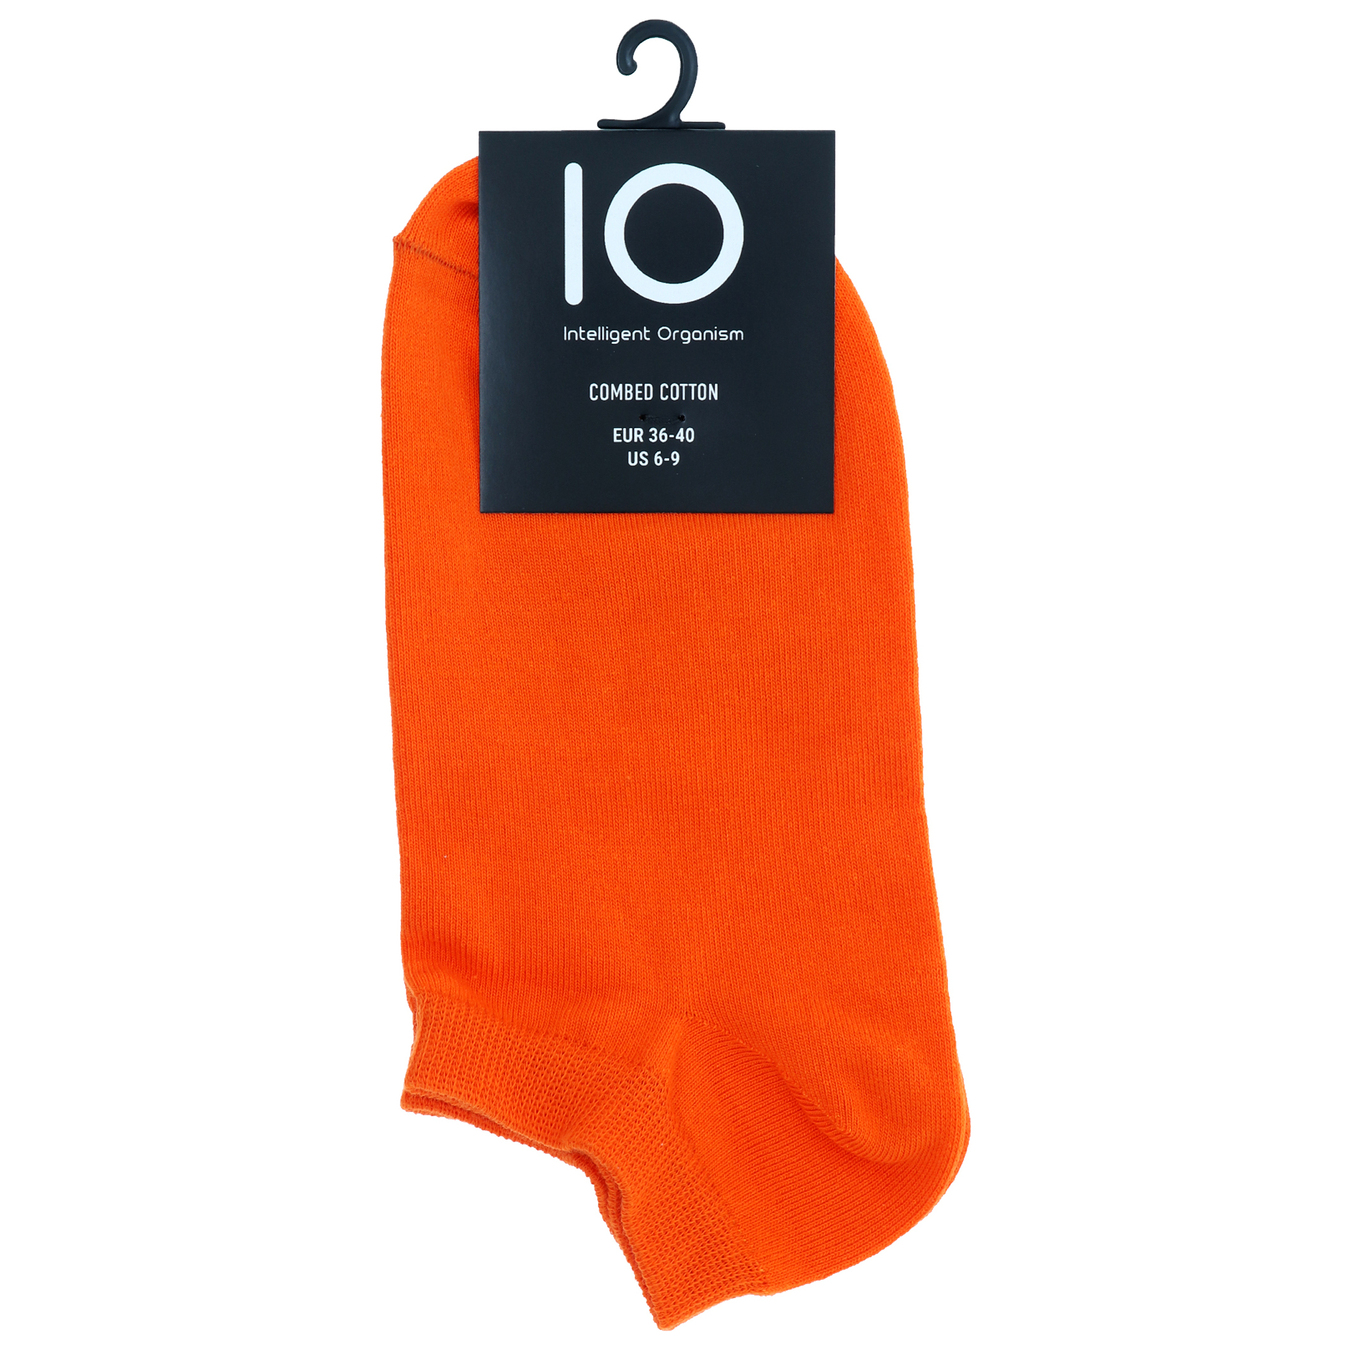 IO socks for women, orange, 36-40 years old.